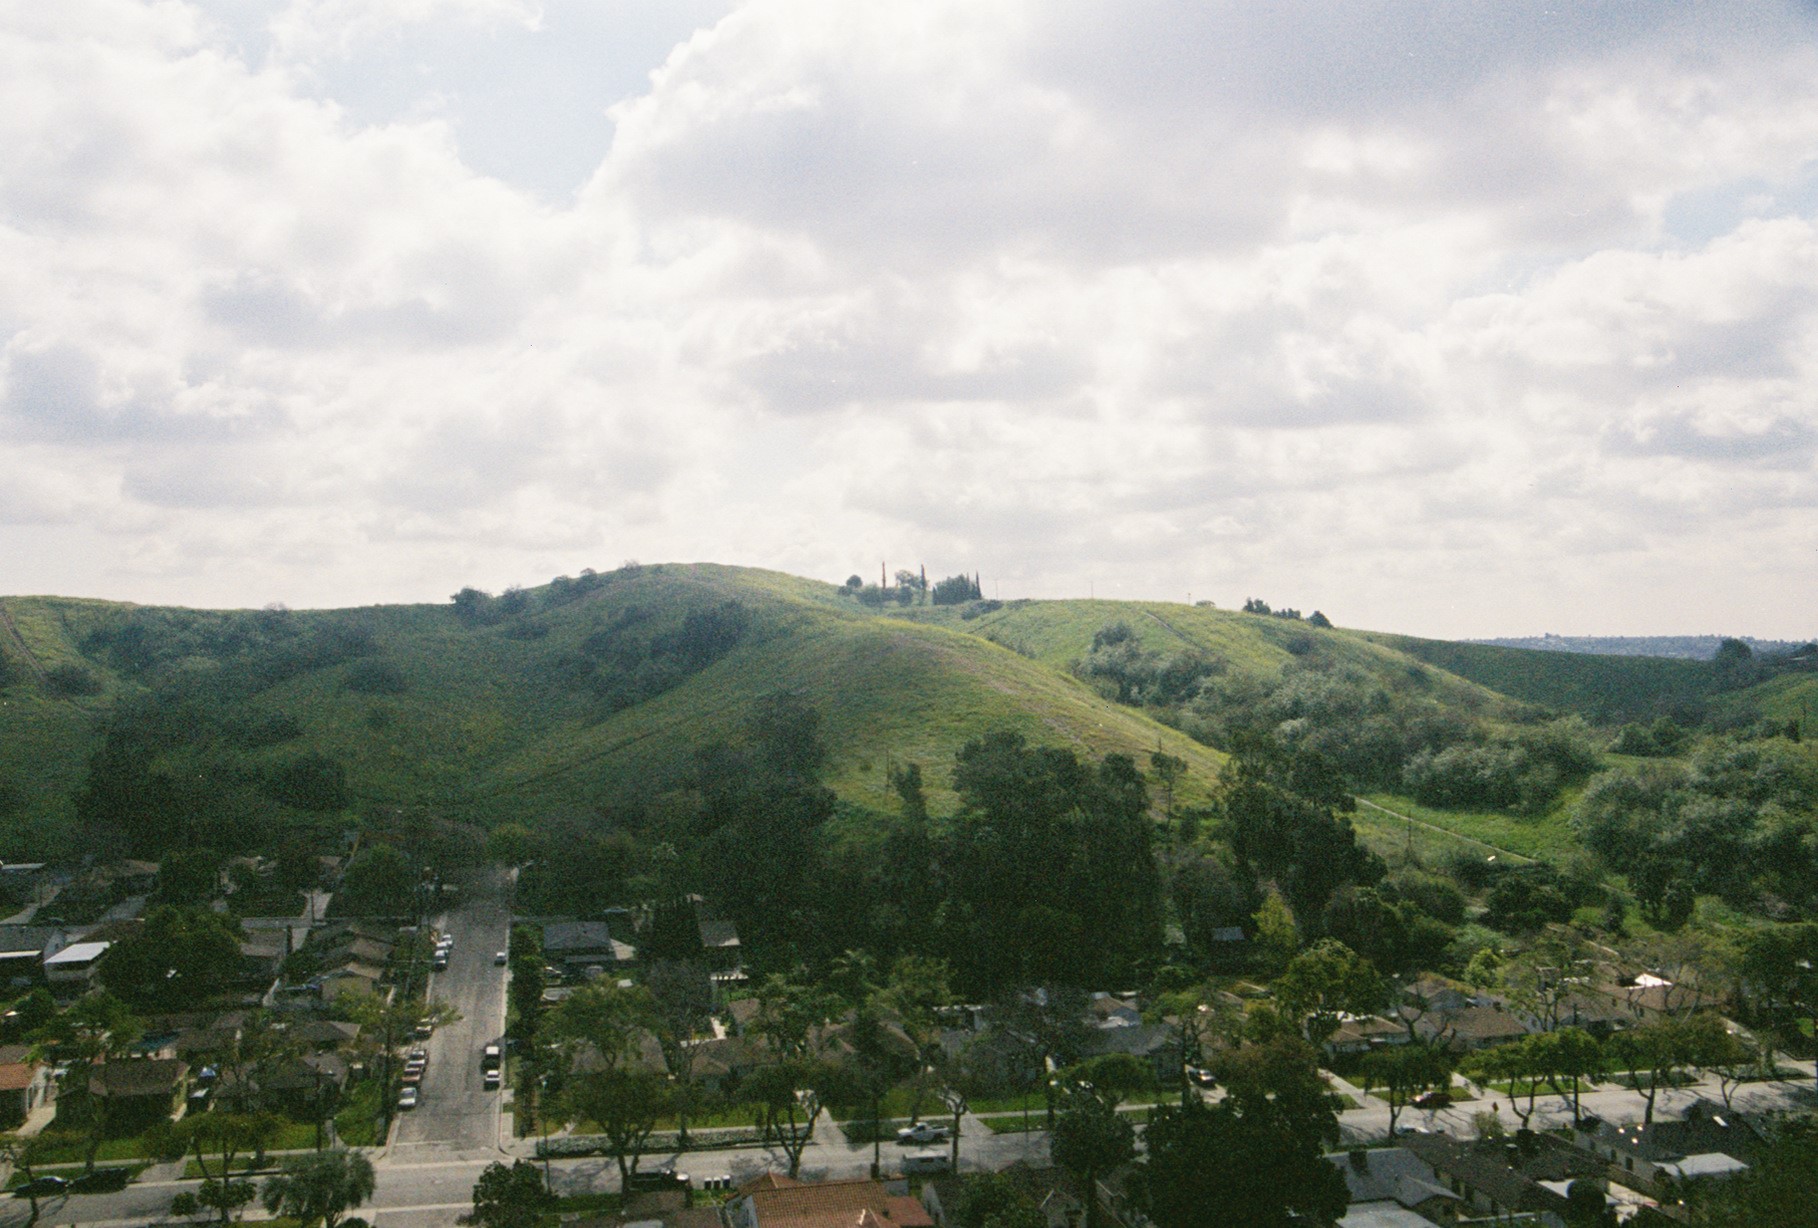 Elephant Hill